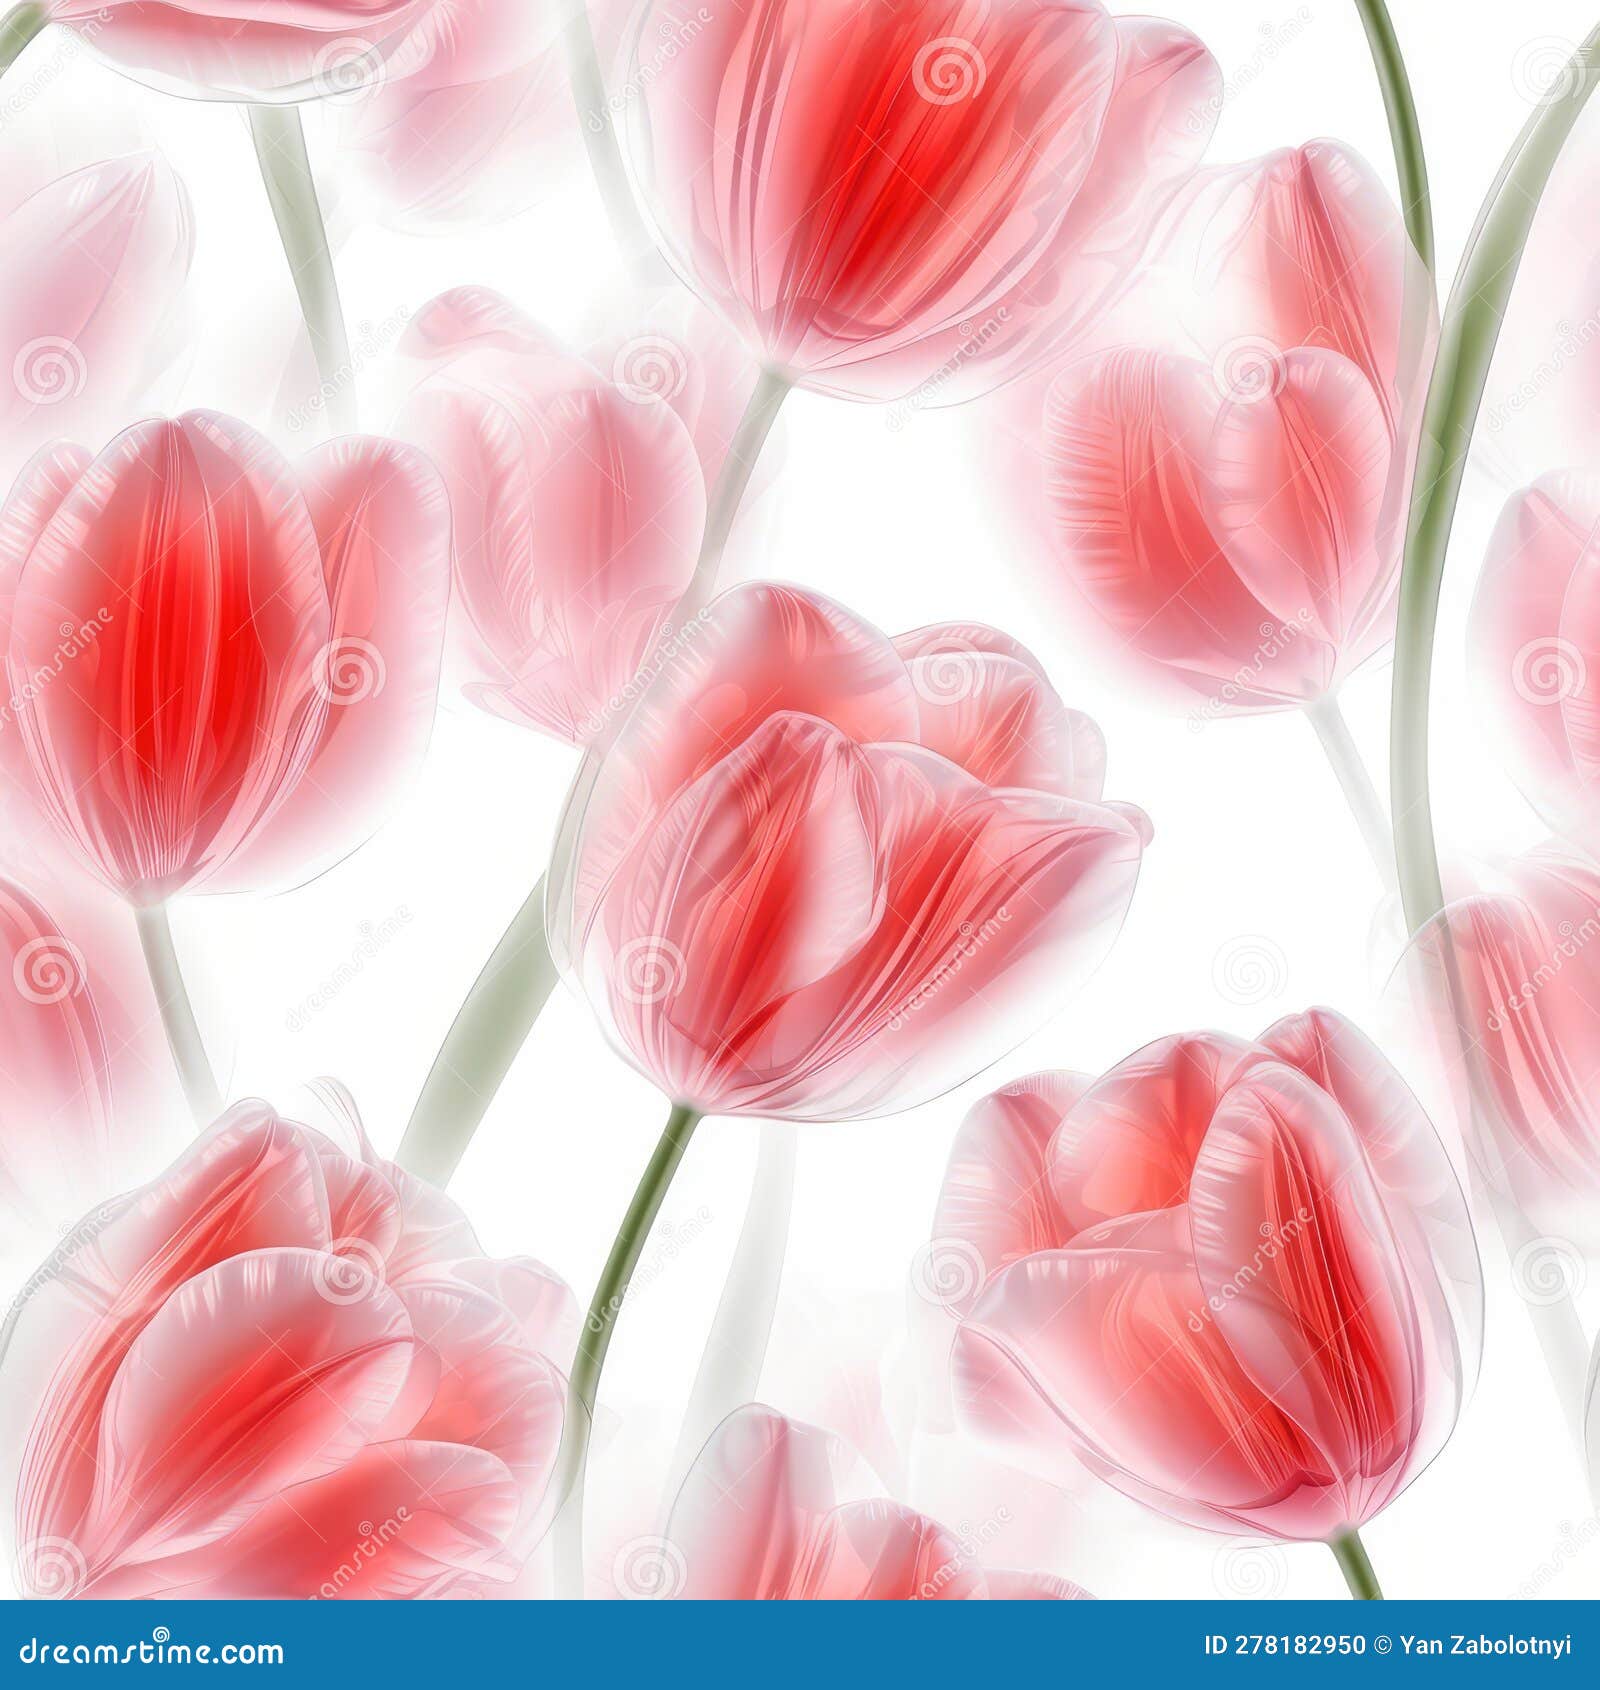 https://thumbs.dreamstime.com/z/tulip-flowers-glass-plastic-texture-super-detail-seamless-background-tulip-flowers-glass-plastic-texture-super-detail-seamless-278182950.jpg